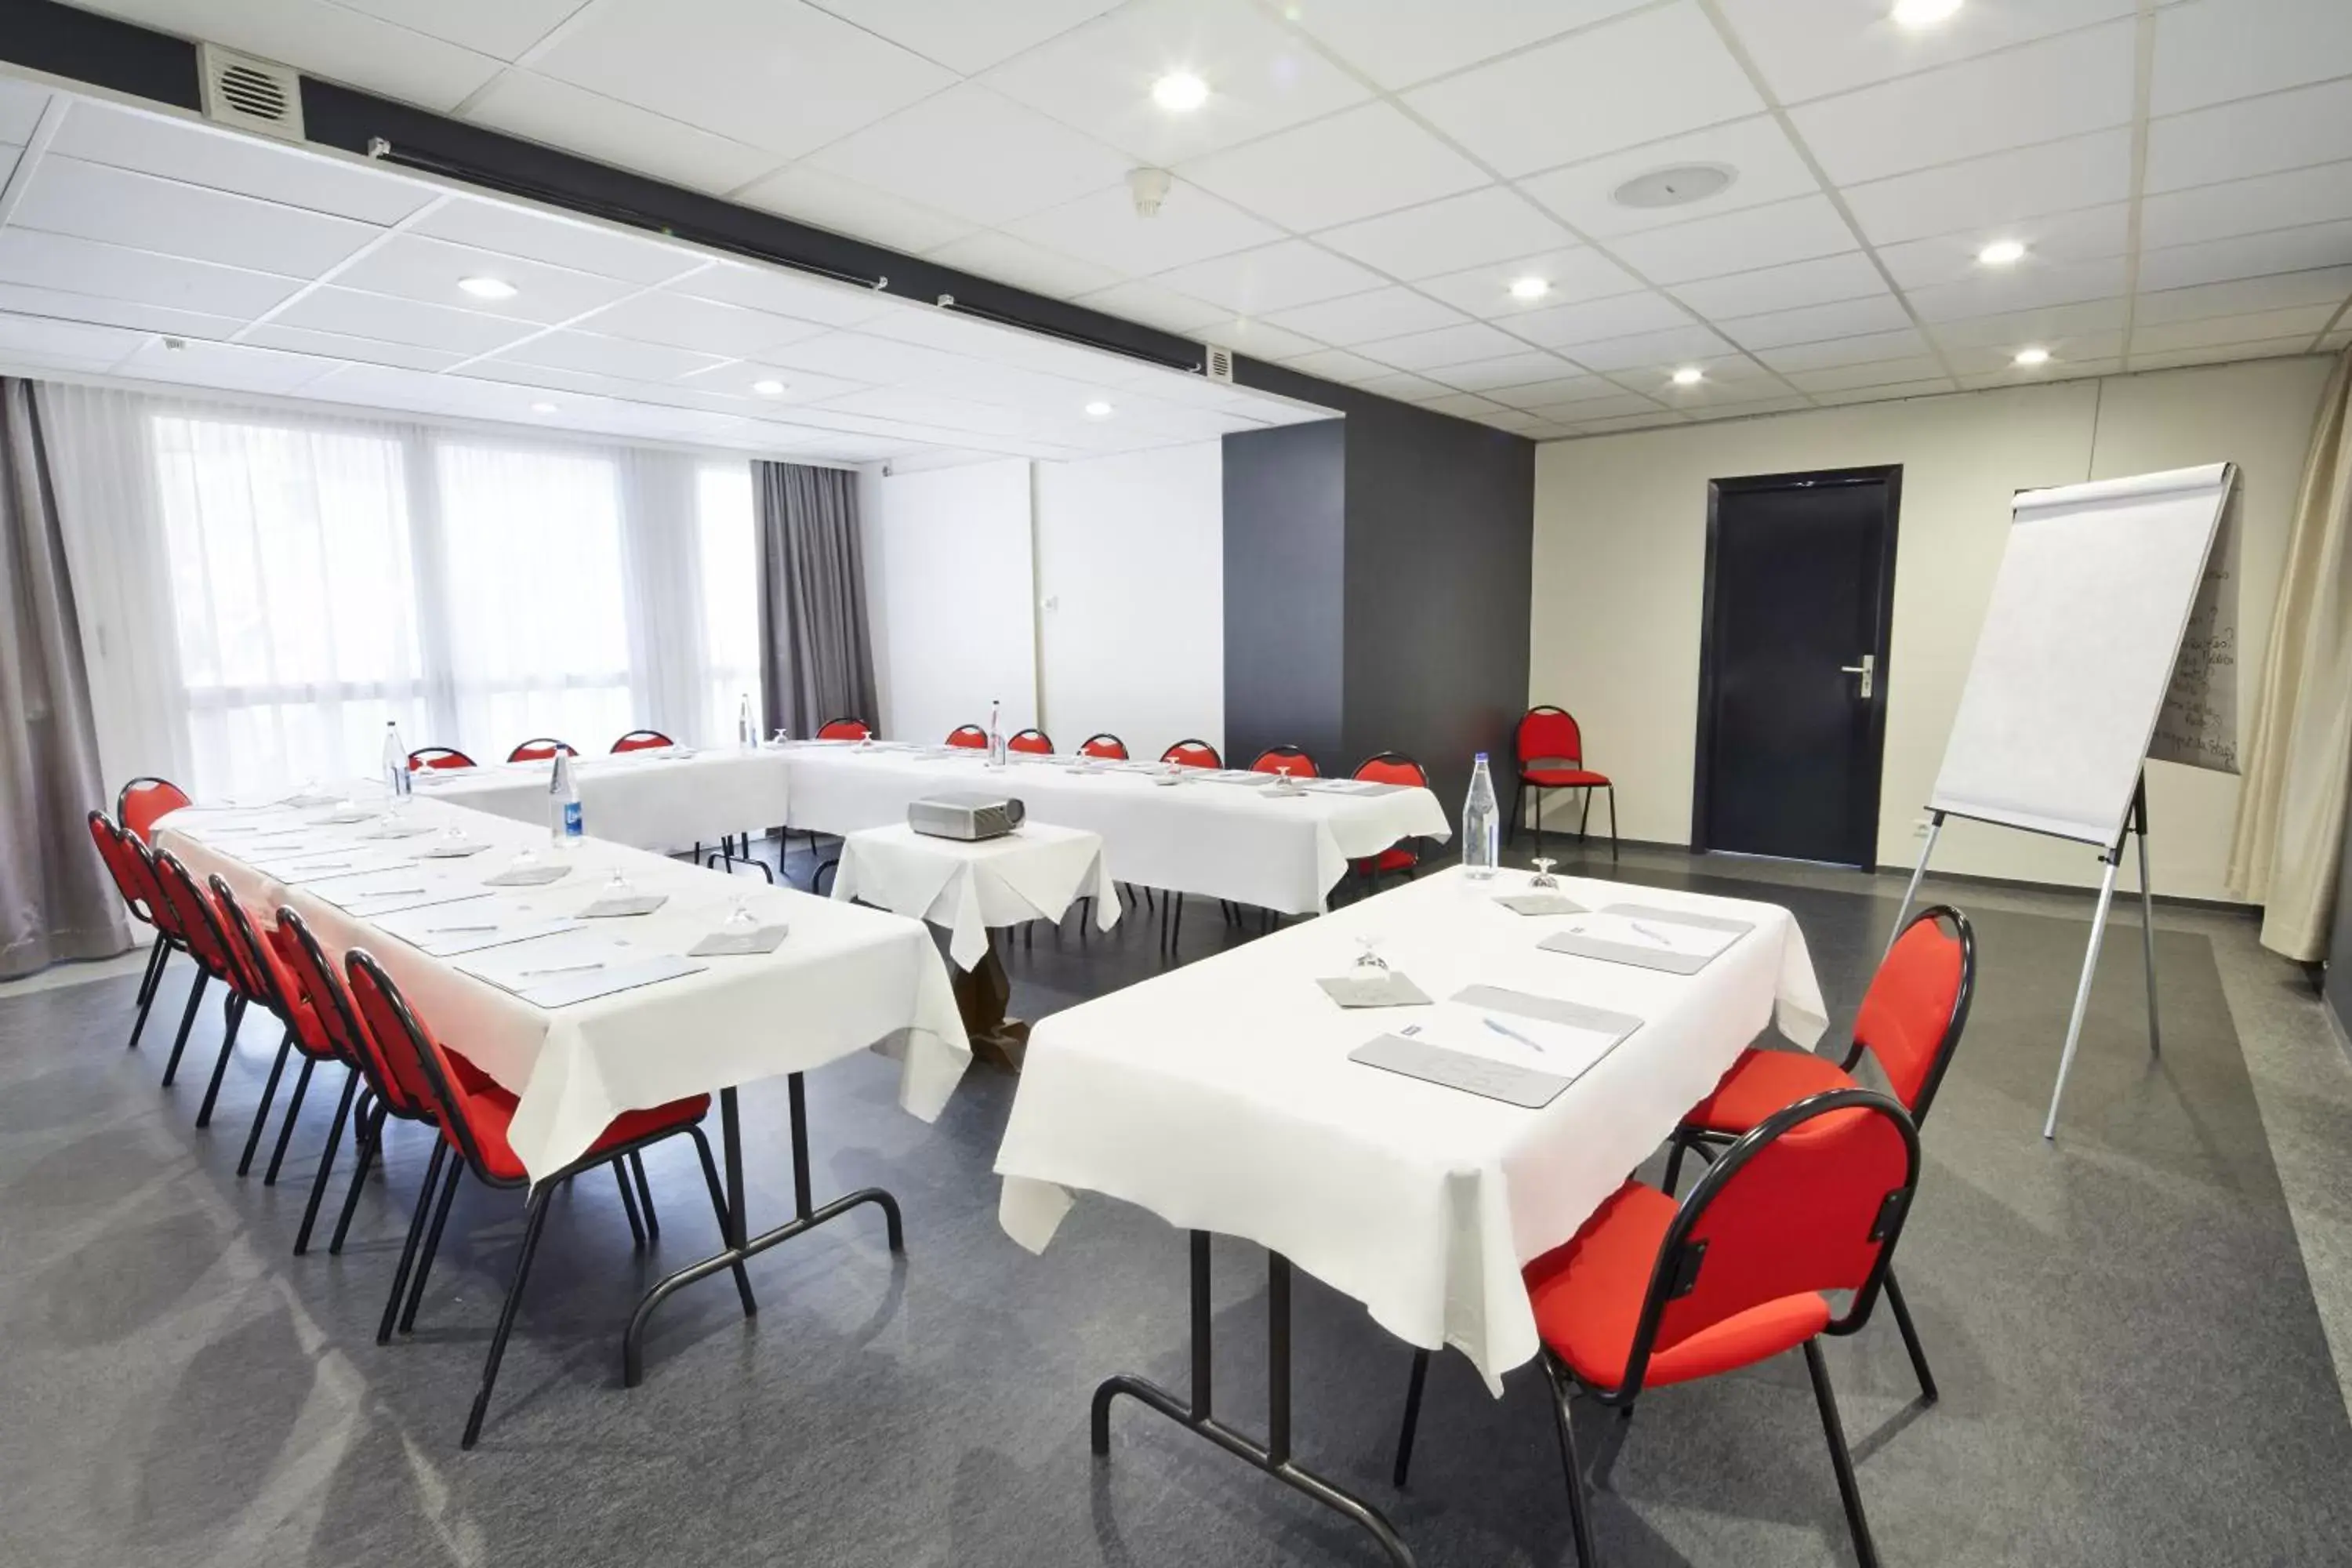 Meeting/conference room in Kyriad Montbeliard Sochaux